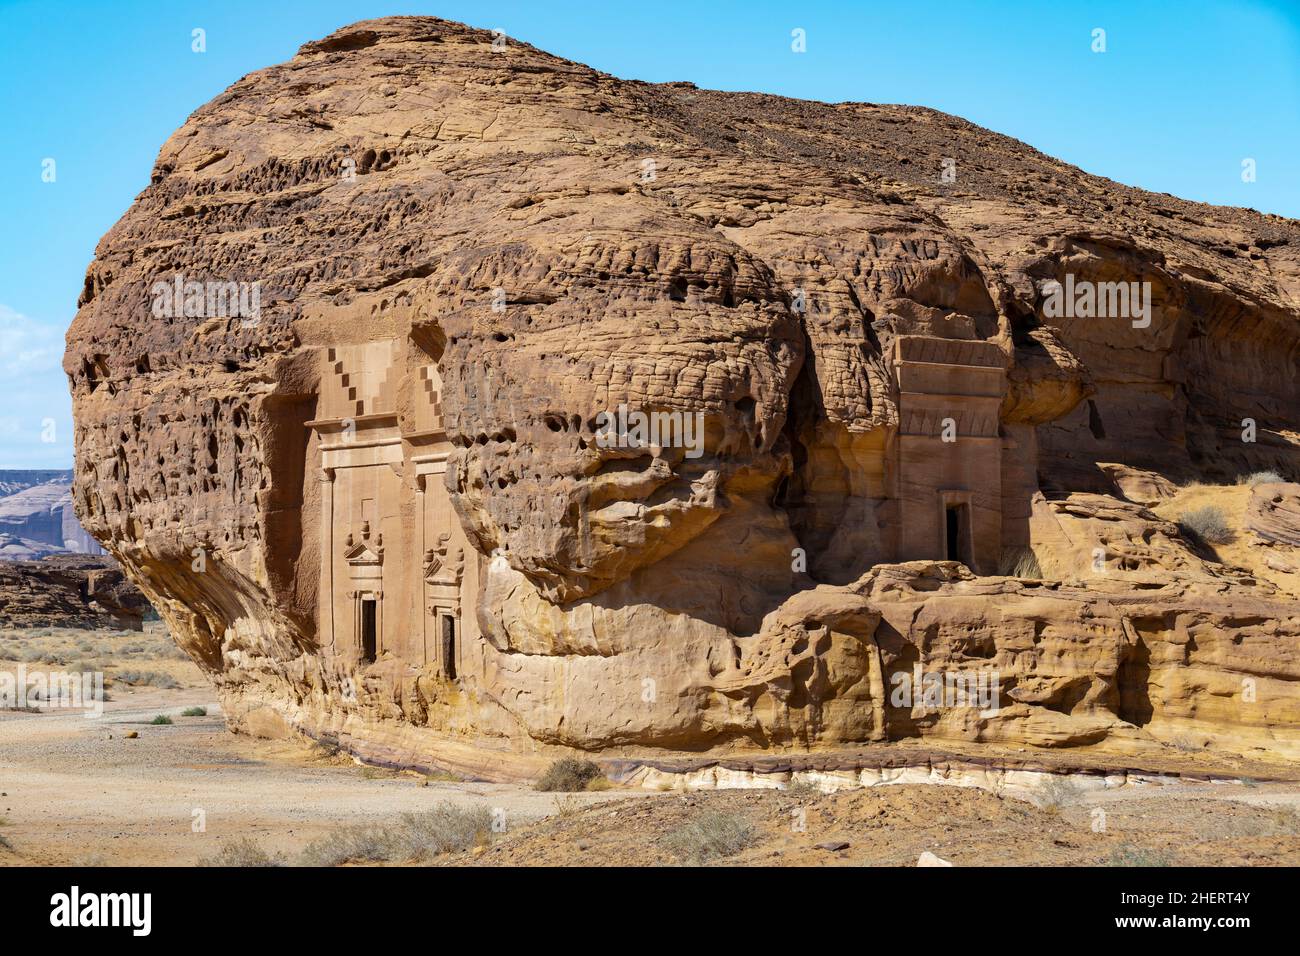 Famose camere di sepoltura di Hegra, al Ula, in Arabia Saudita Foto Stock